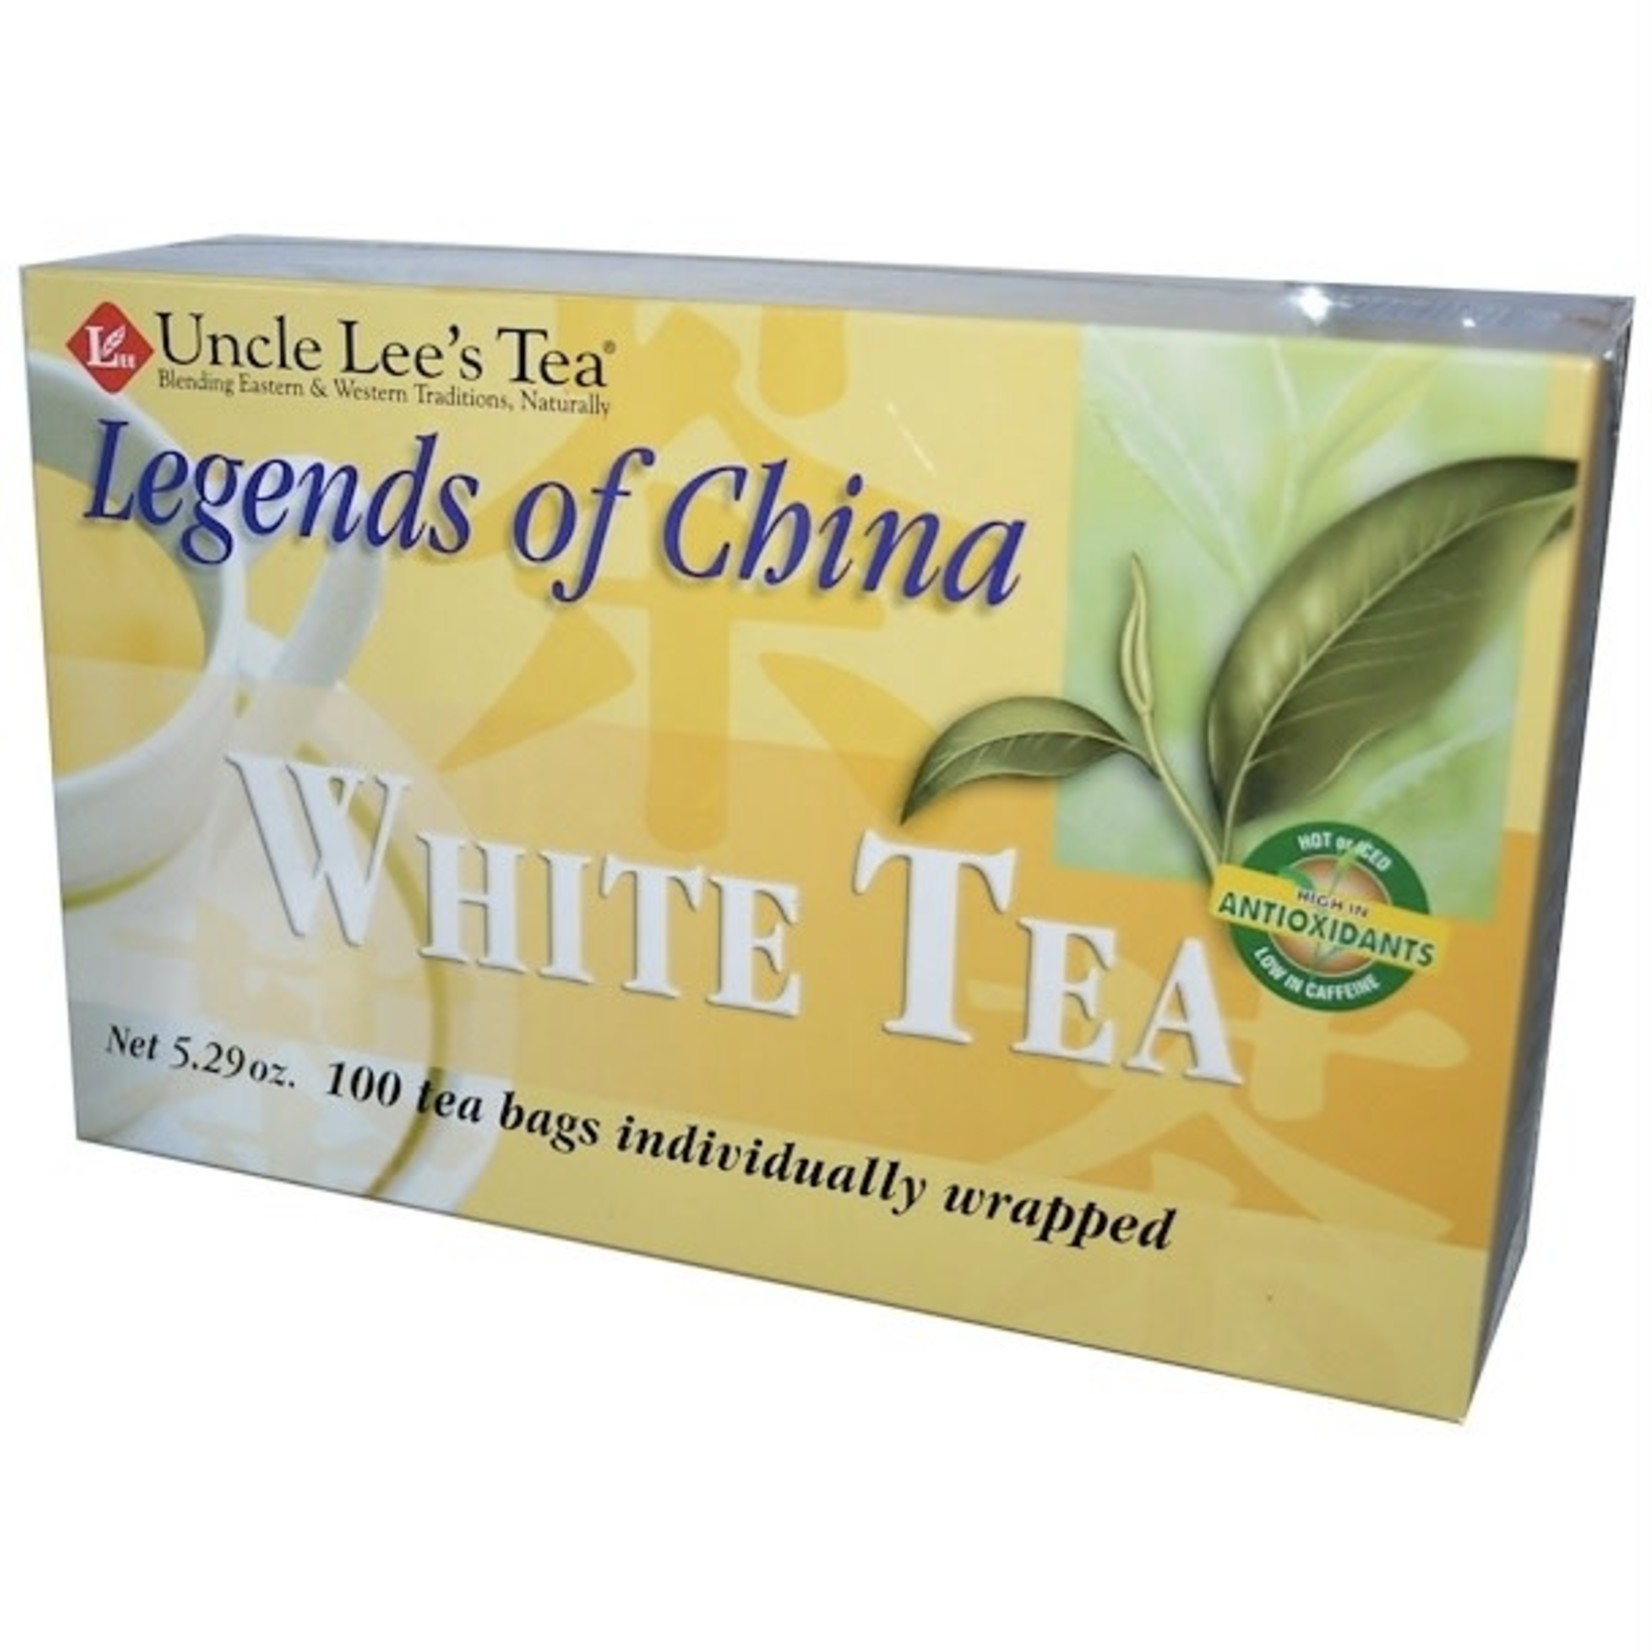 Uncle Lee’s Uncle Lee’s White Tea 100 teabags